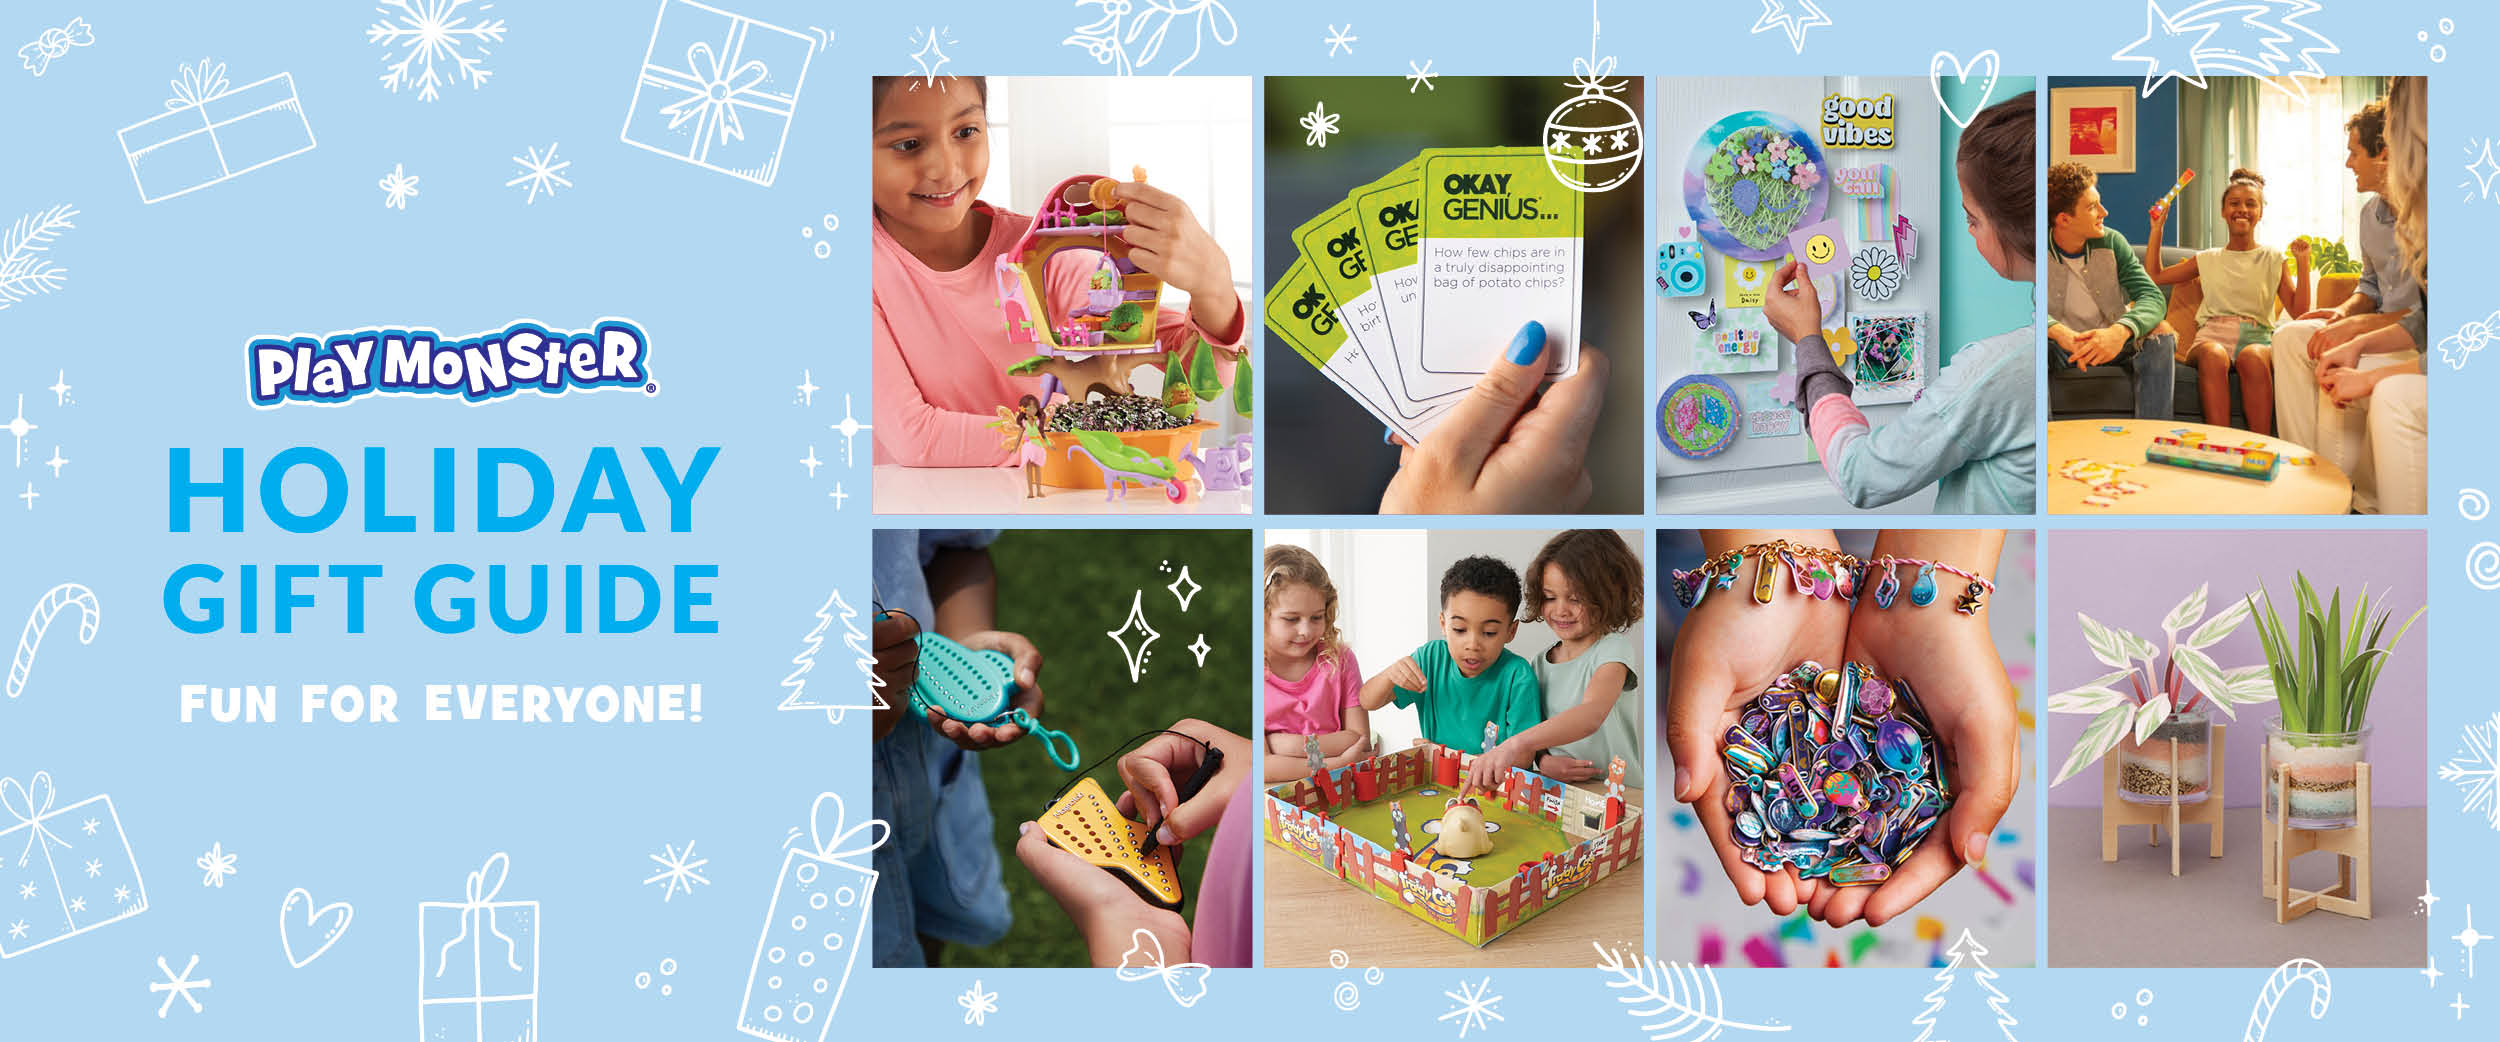 Fairy Magic Potion Kits For Kids - DIY Make 22 Bottles Magical Potions,  Creative Art Craft Kit For Girls, Fun Birthday Gift Toys For Girls